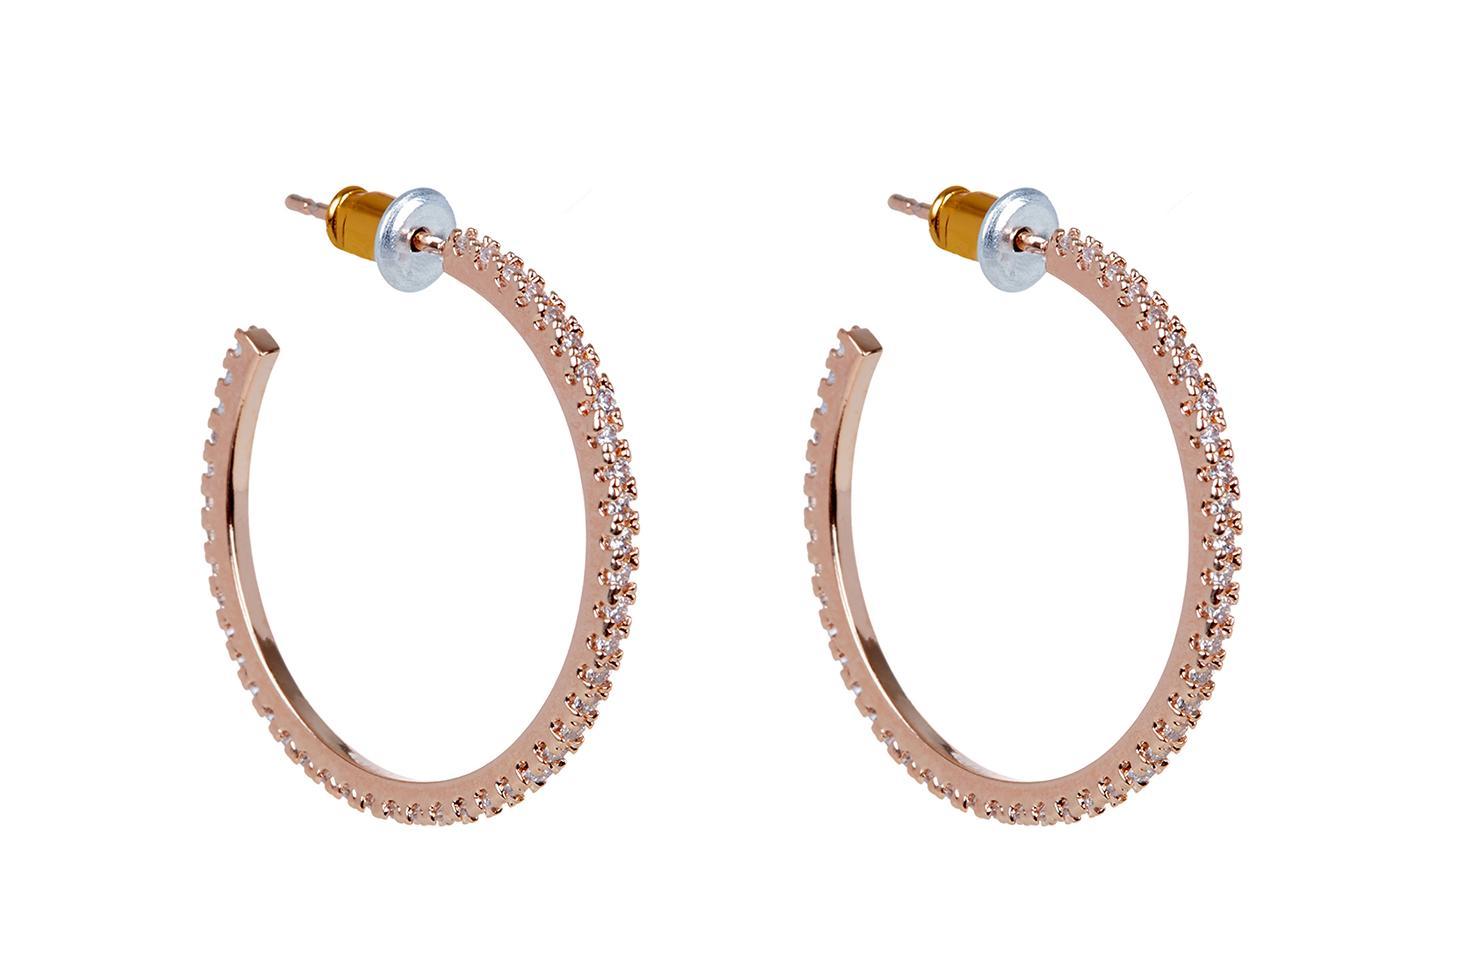 Diamante Hoop Earrings, Accessorize, €25,90